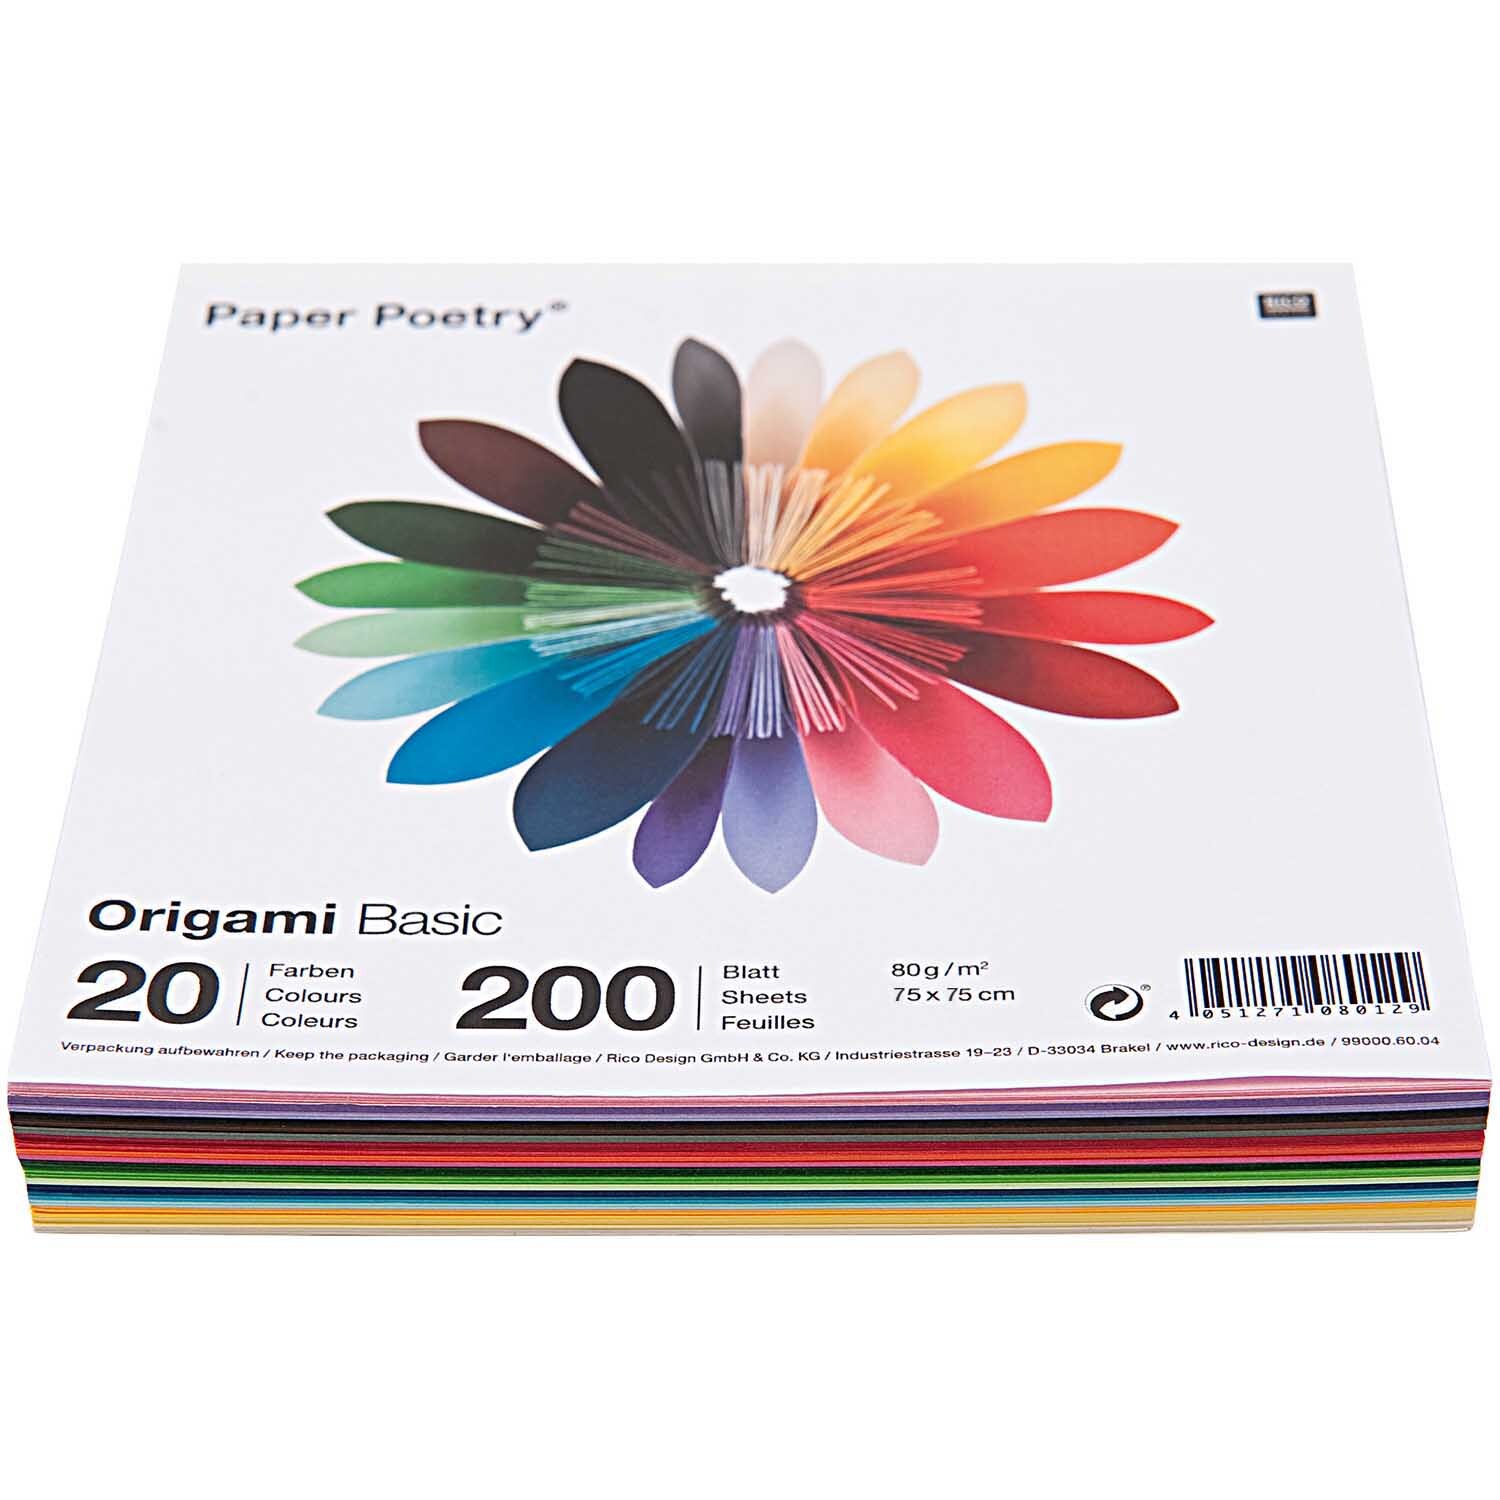 Paper Poetry Origami basic 7,5x7,5cm 200 Blatt 20 Farben